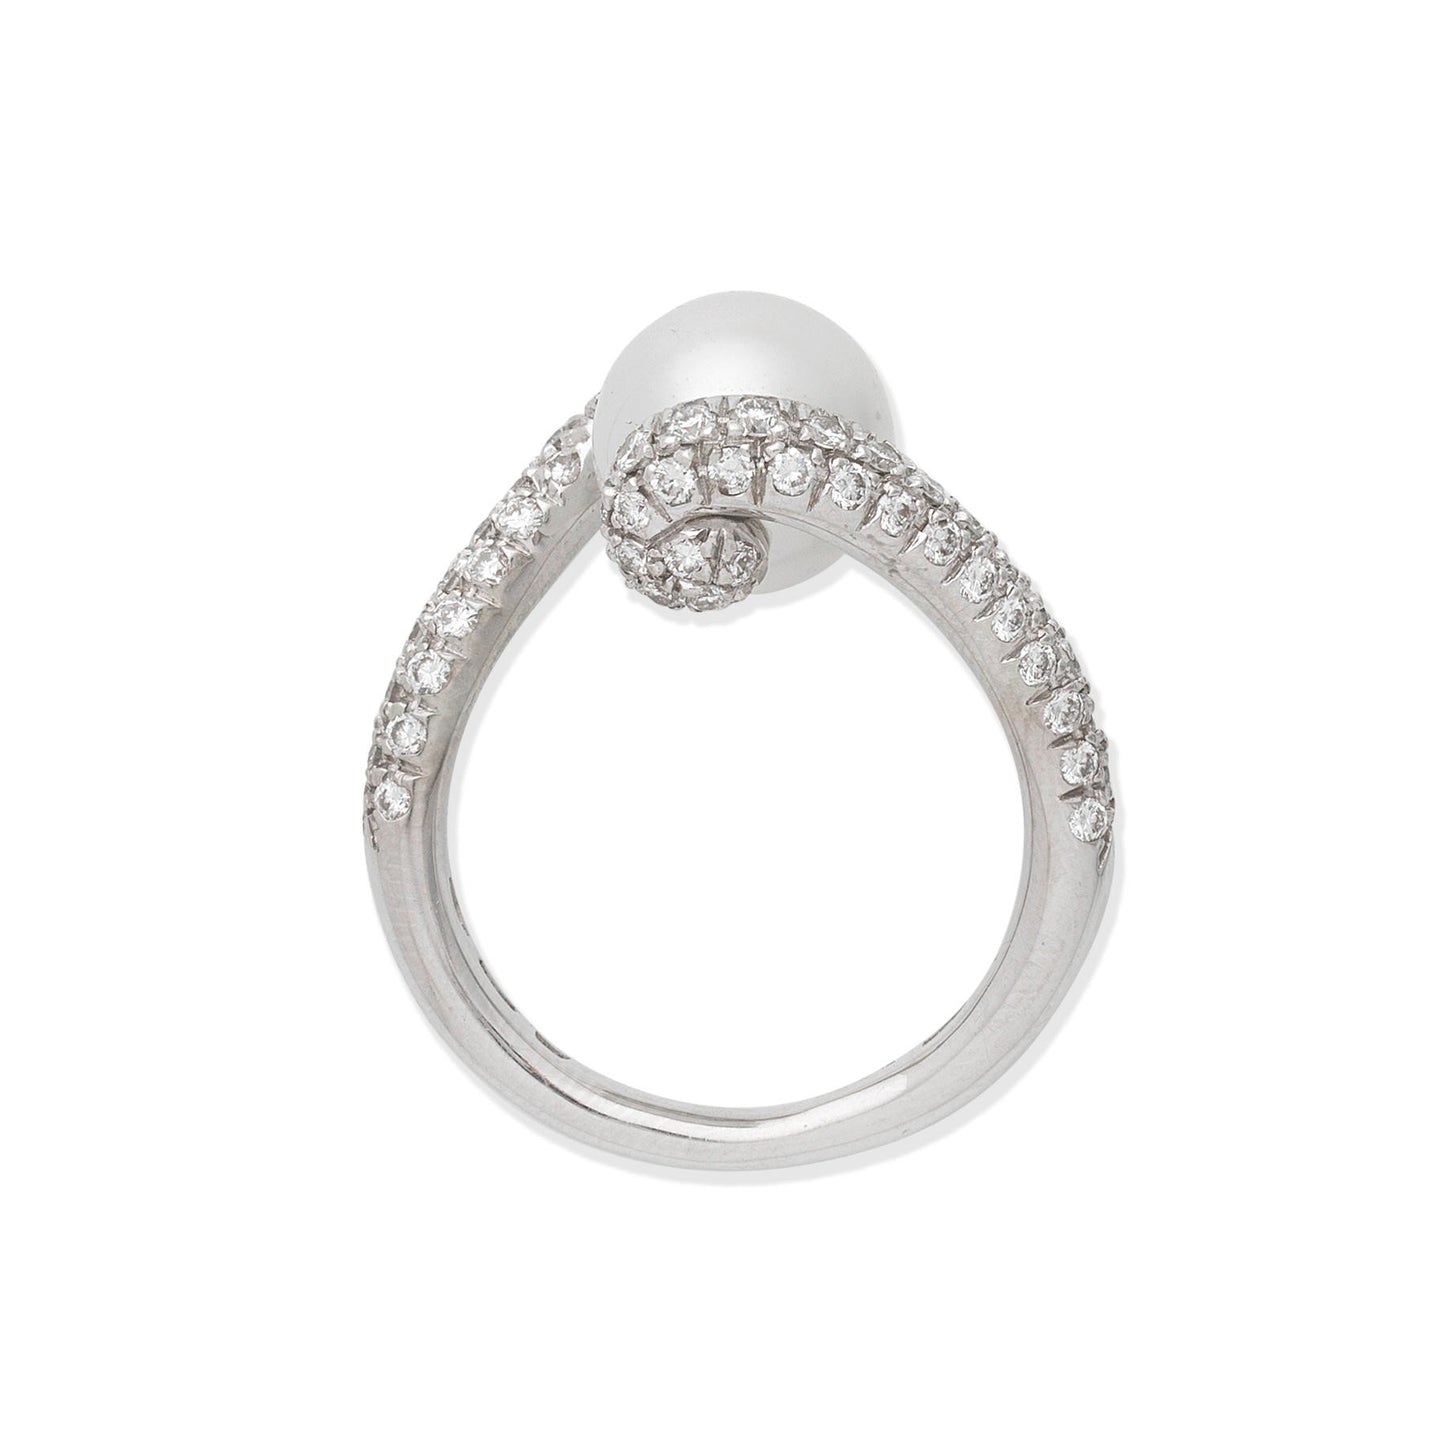 Mikimoto Pearl Ring